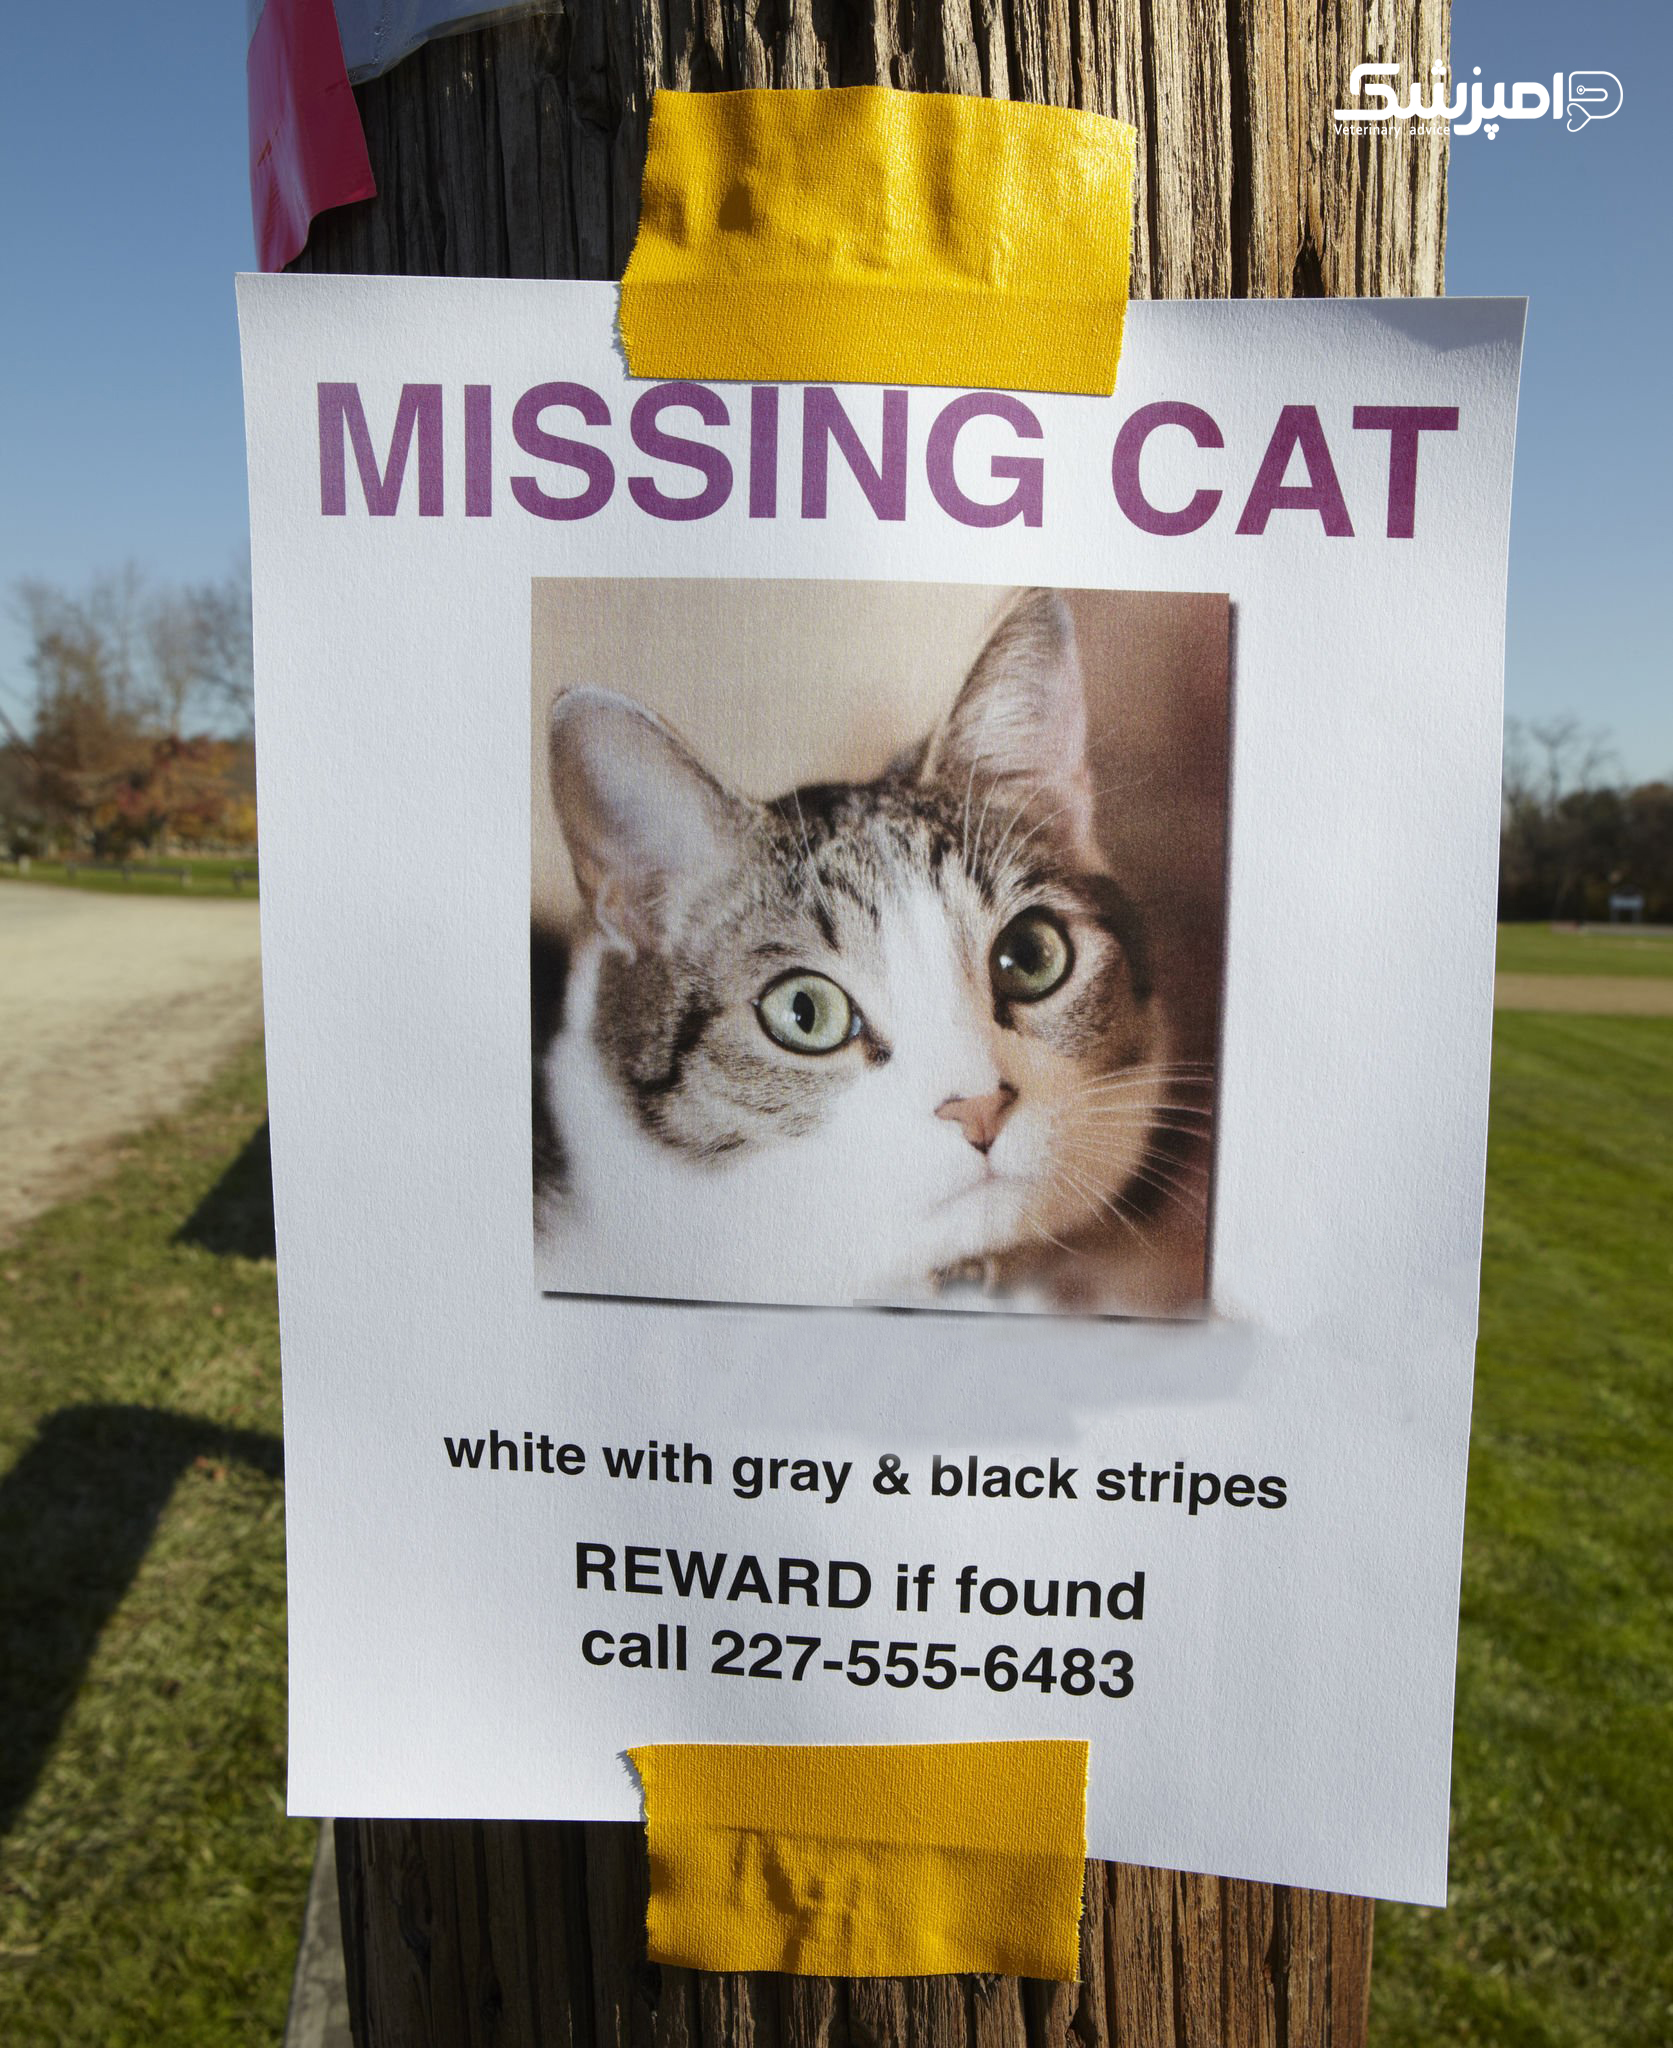 گربه گمشده